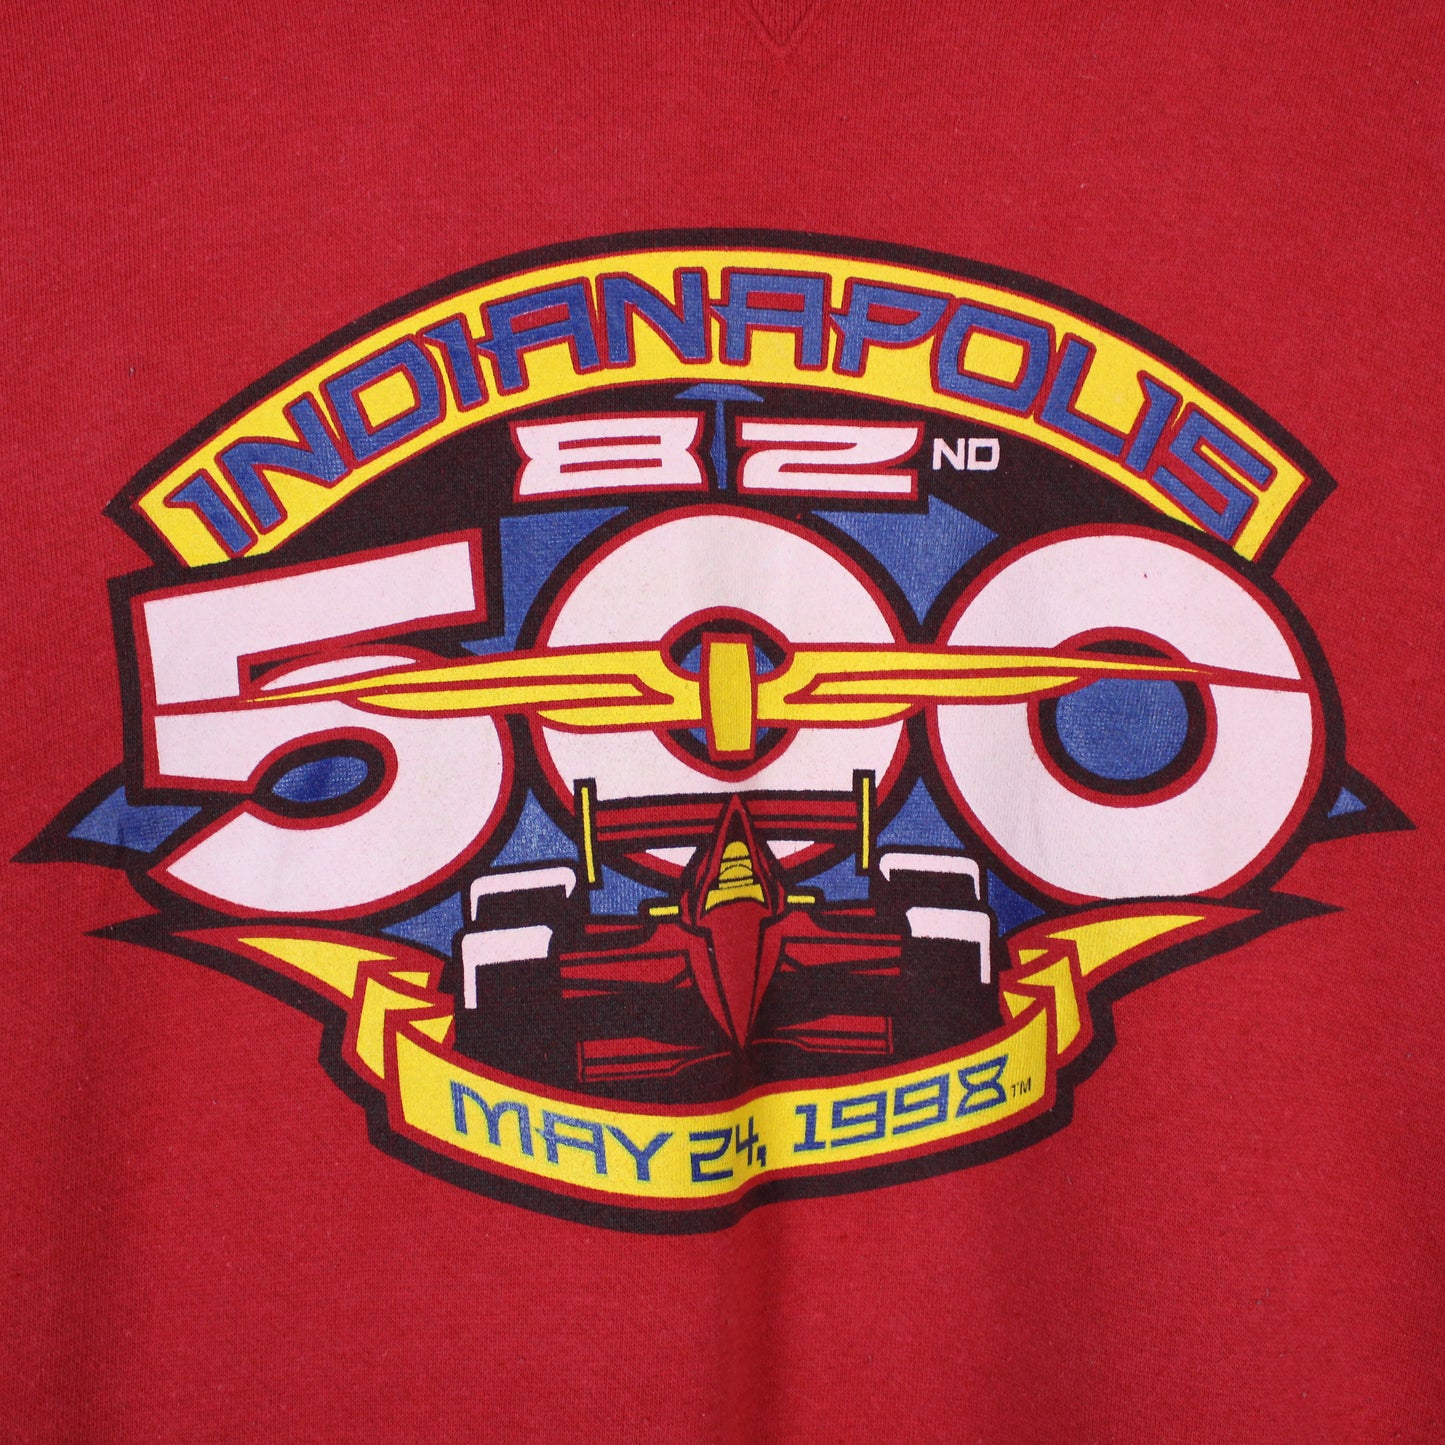 Vintage 1998 Indy 500 NASCAR Sweatshirt - XL